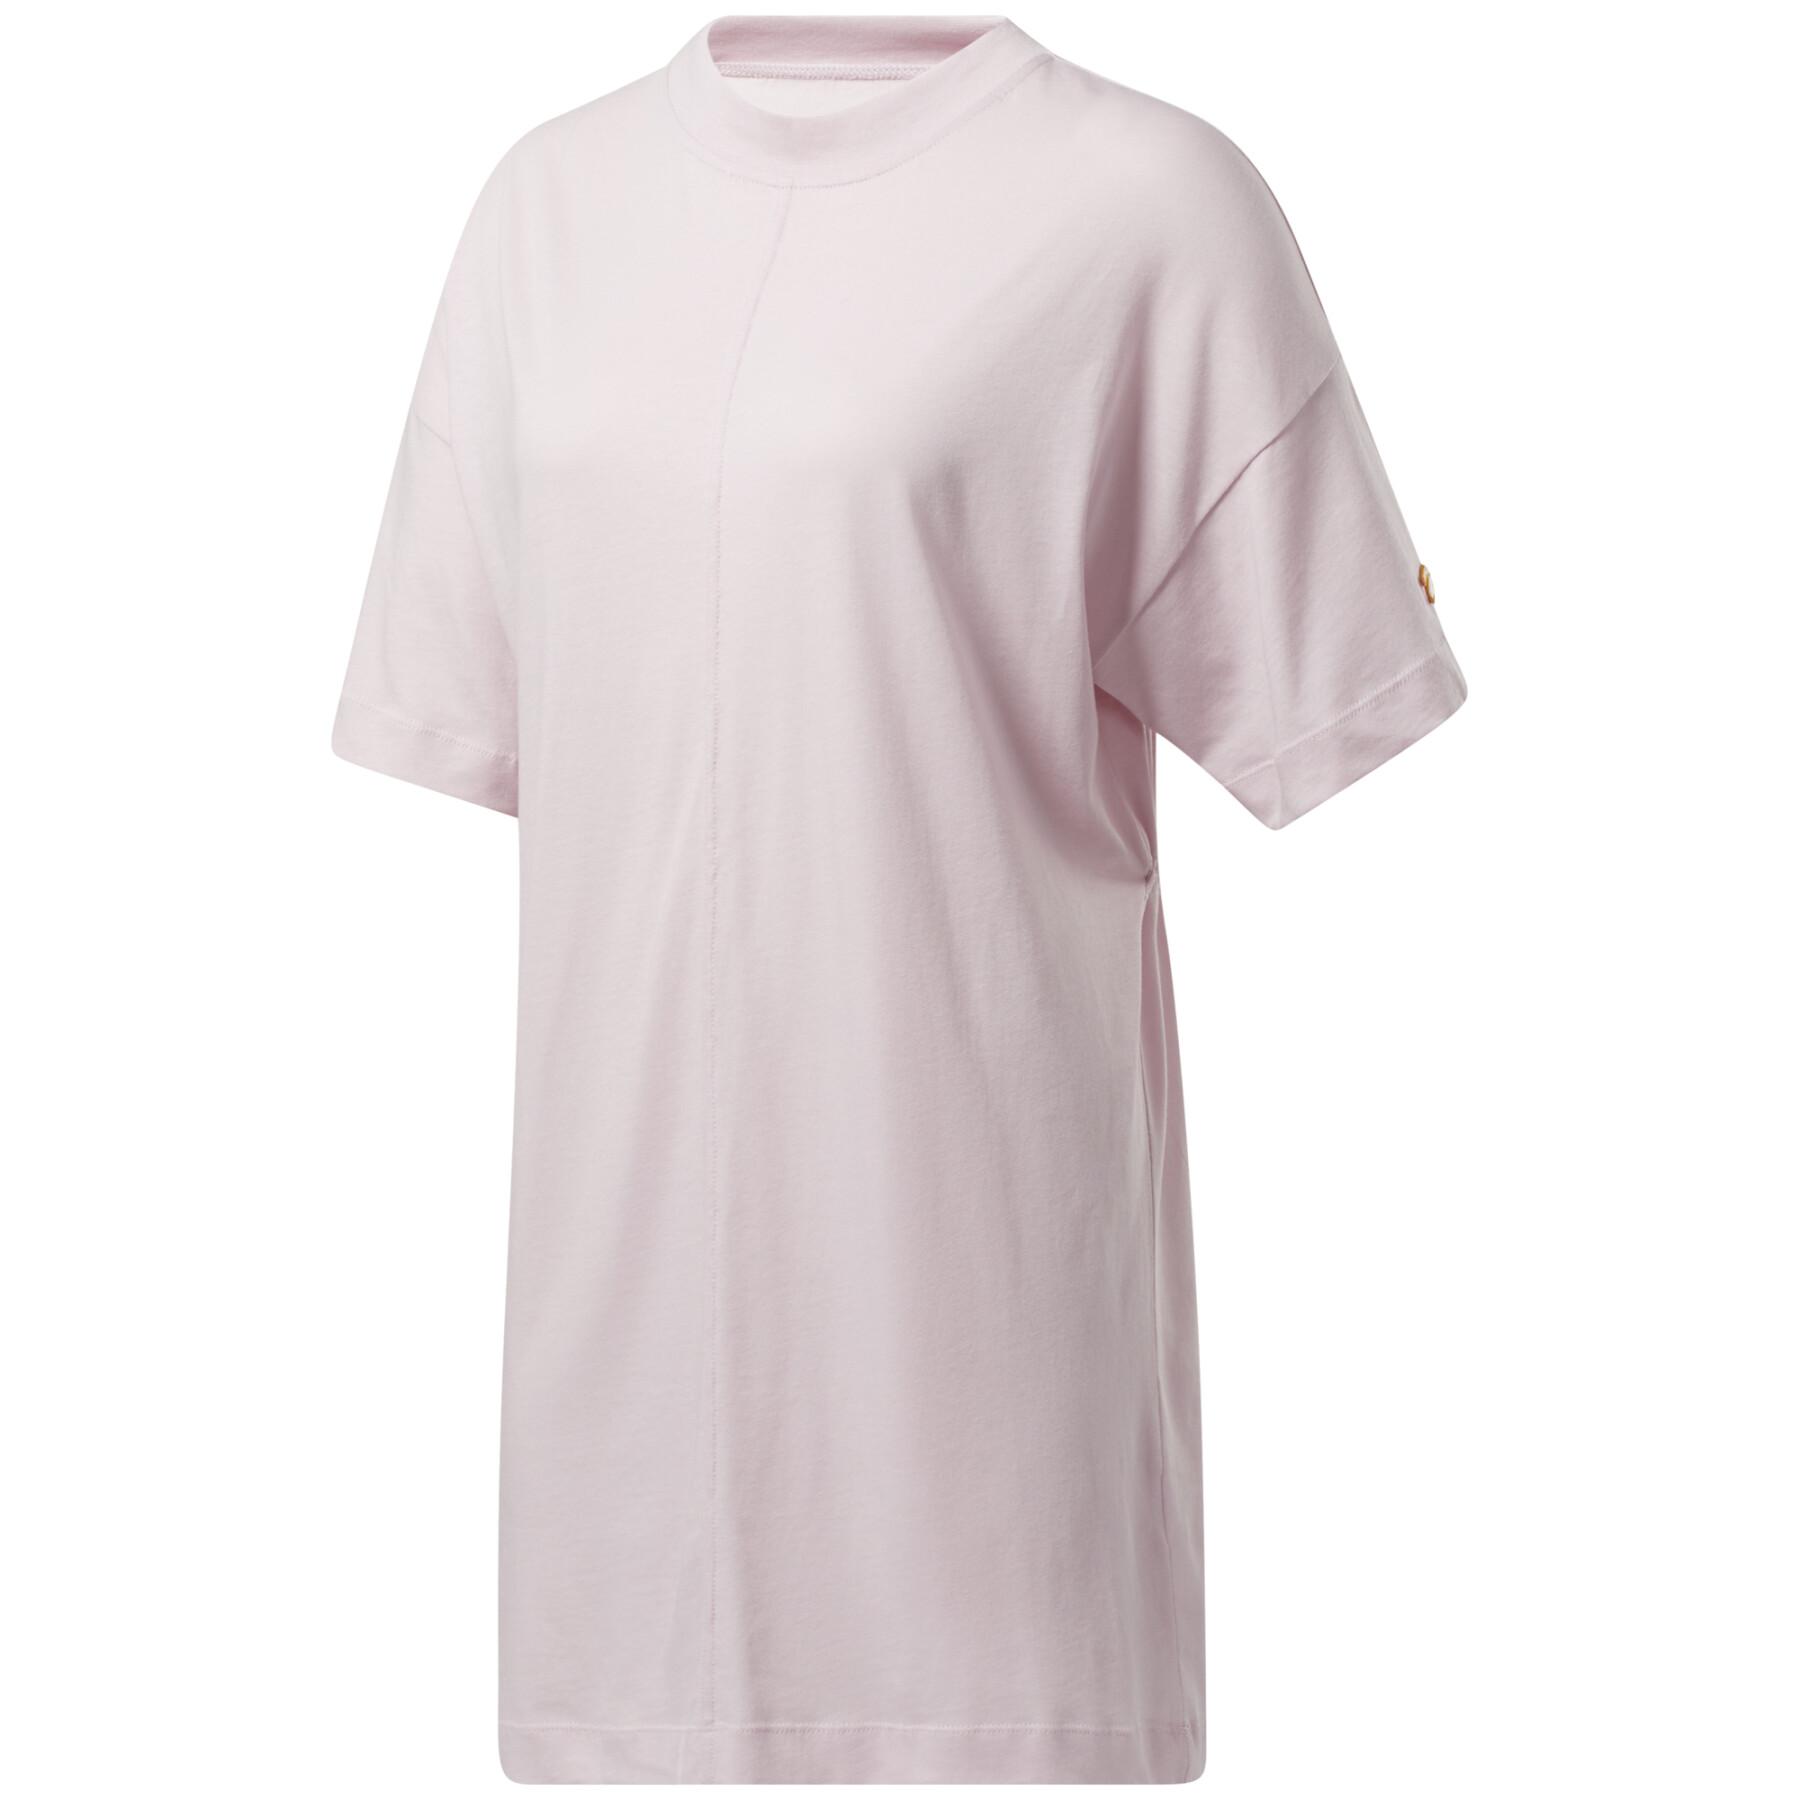 Damska sukienka t-shirtowa Reebok MYT Dress